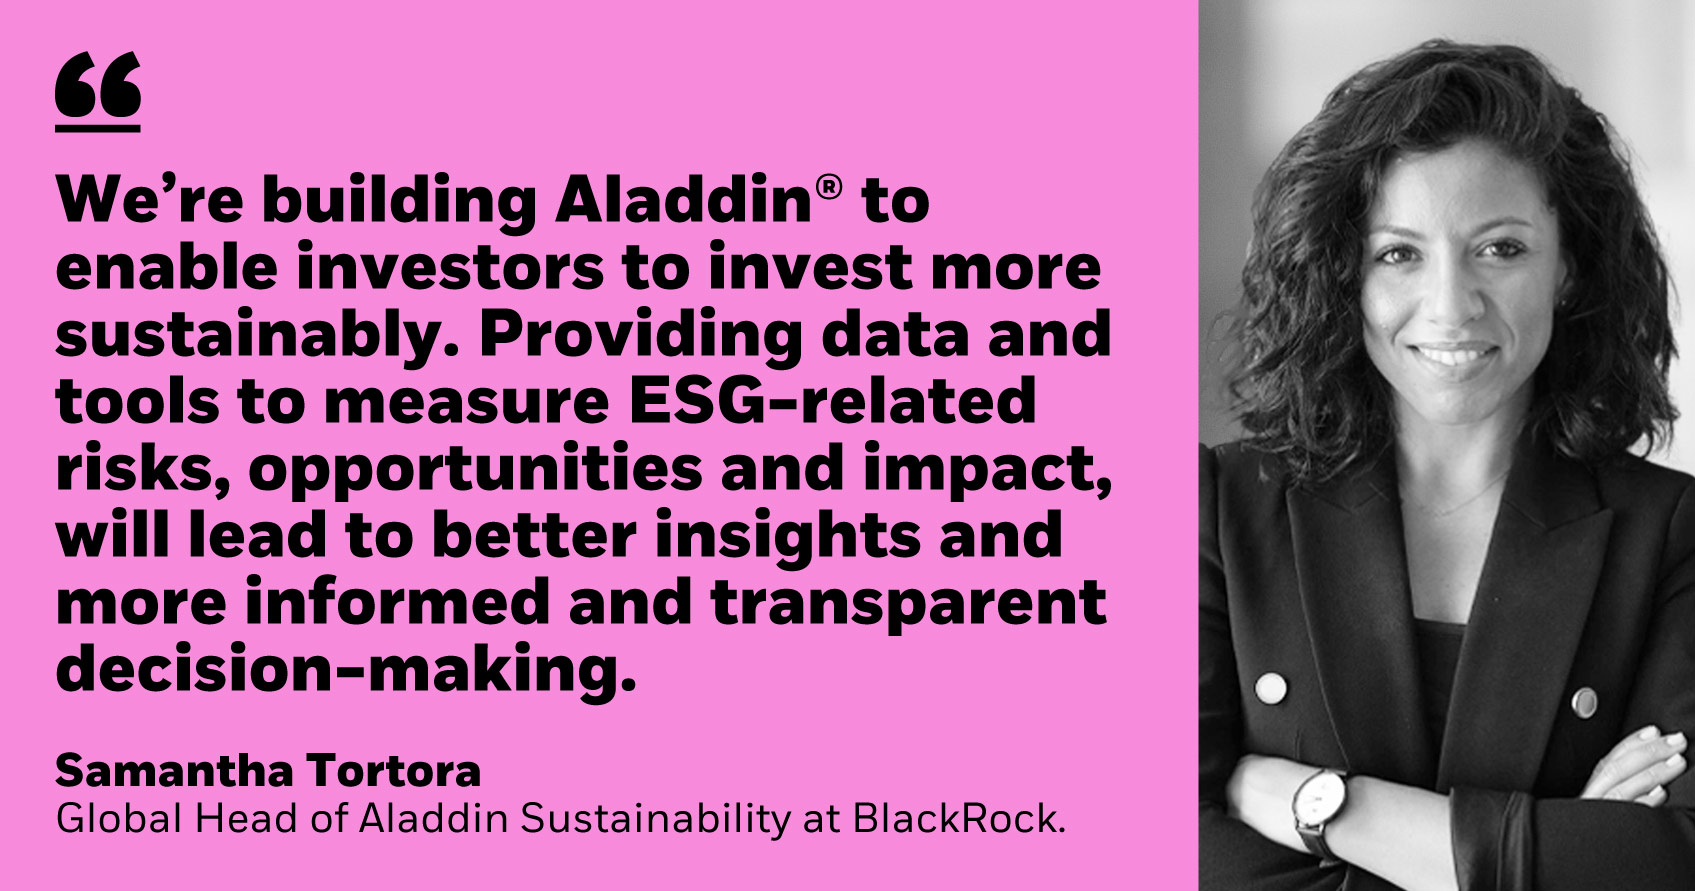 Samantha Tortora, Global Head of Aladdin Sustainability at BlackRock